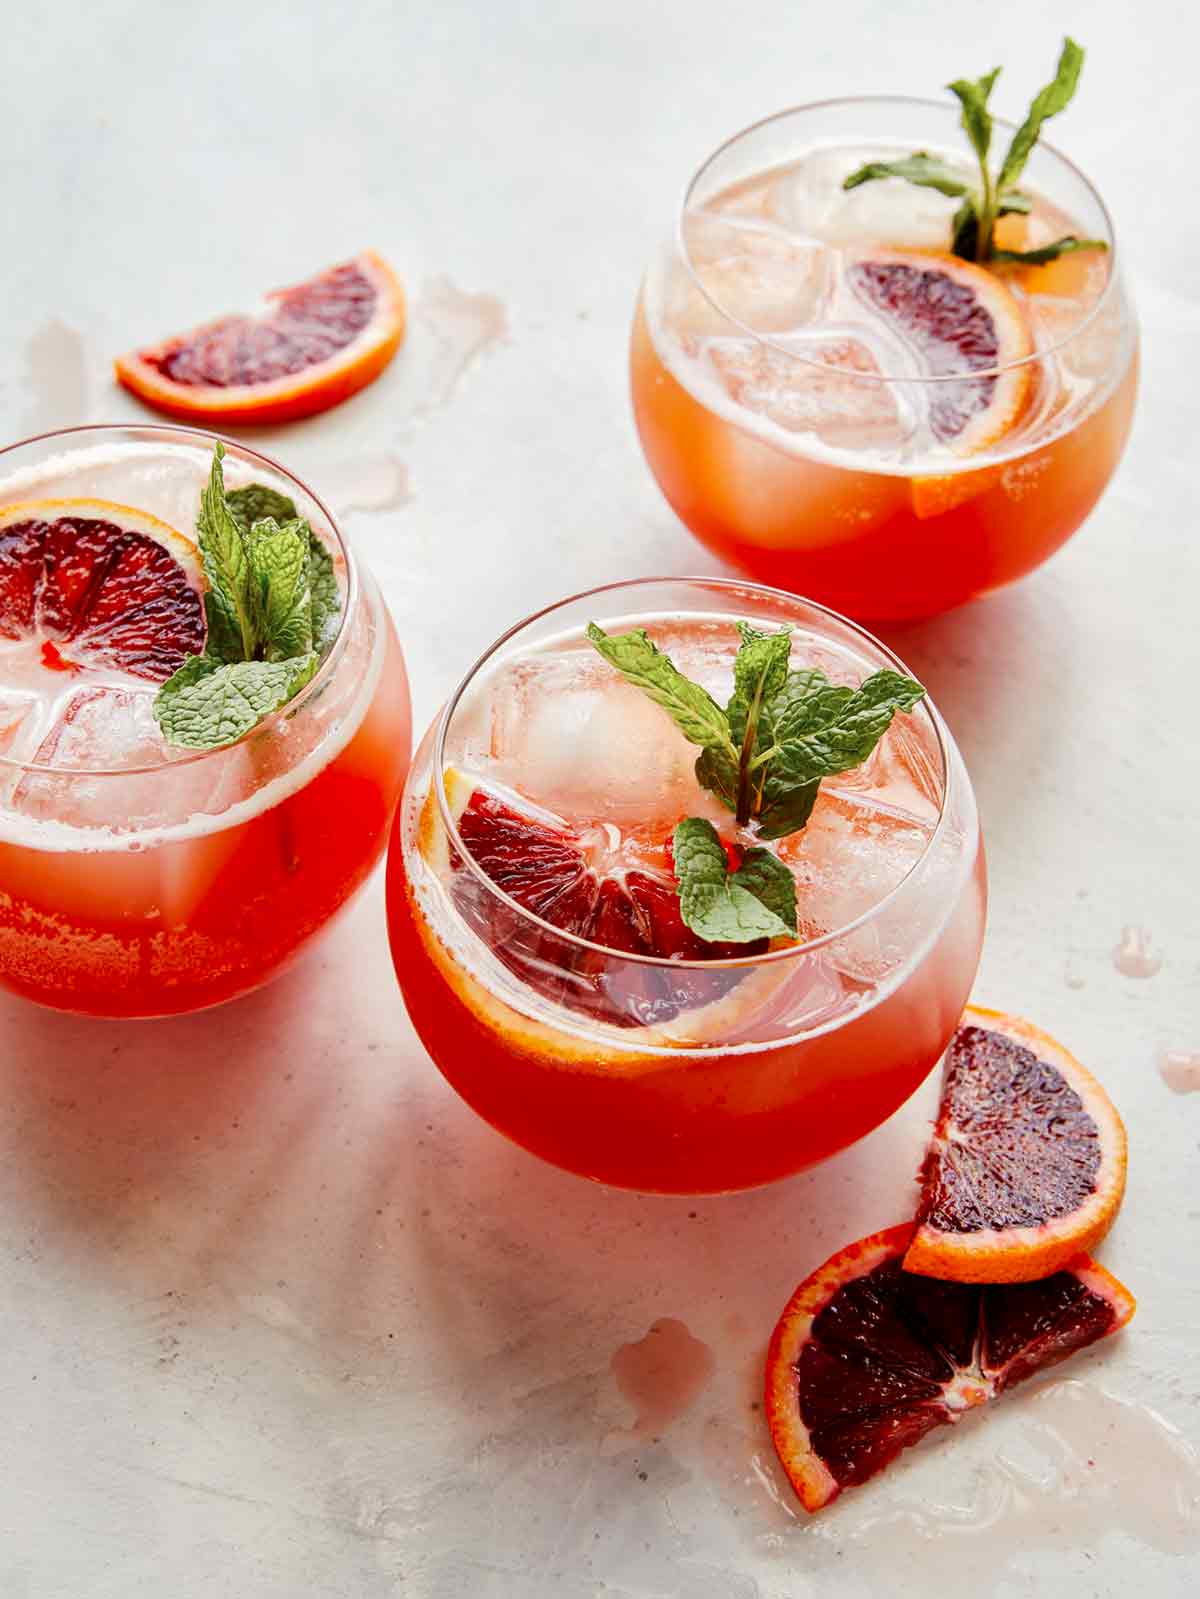 Blood orange shandy cocktails garnished with blood oranges and mint.